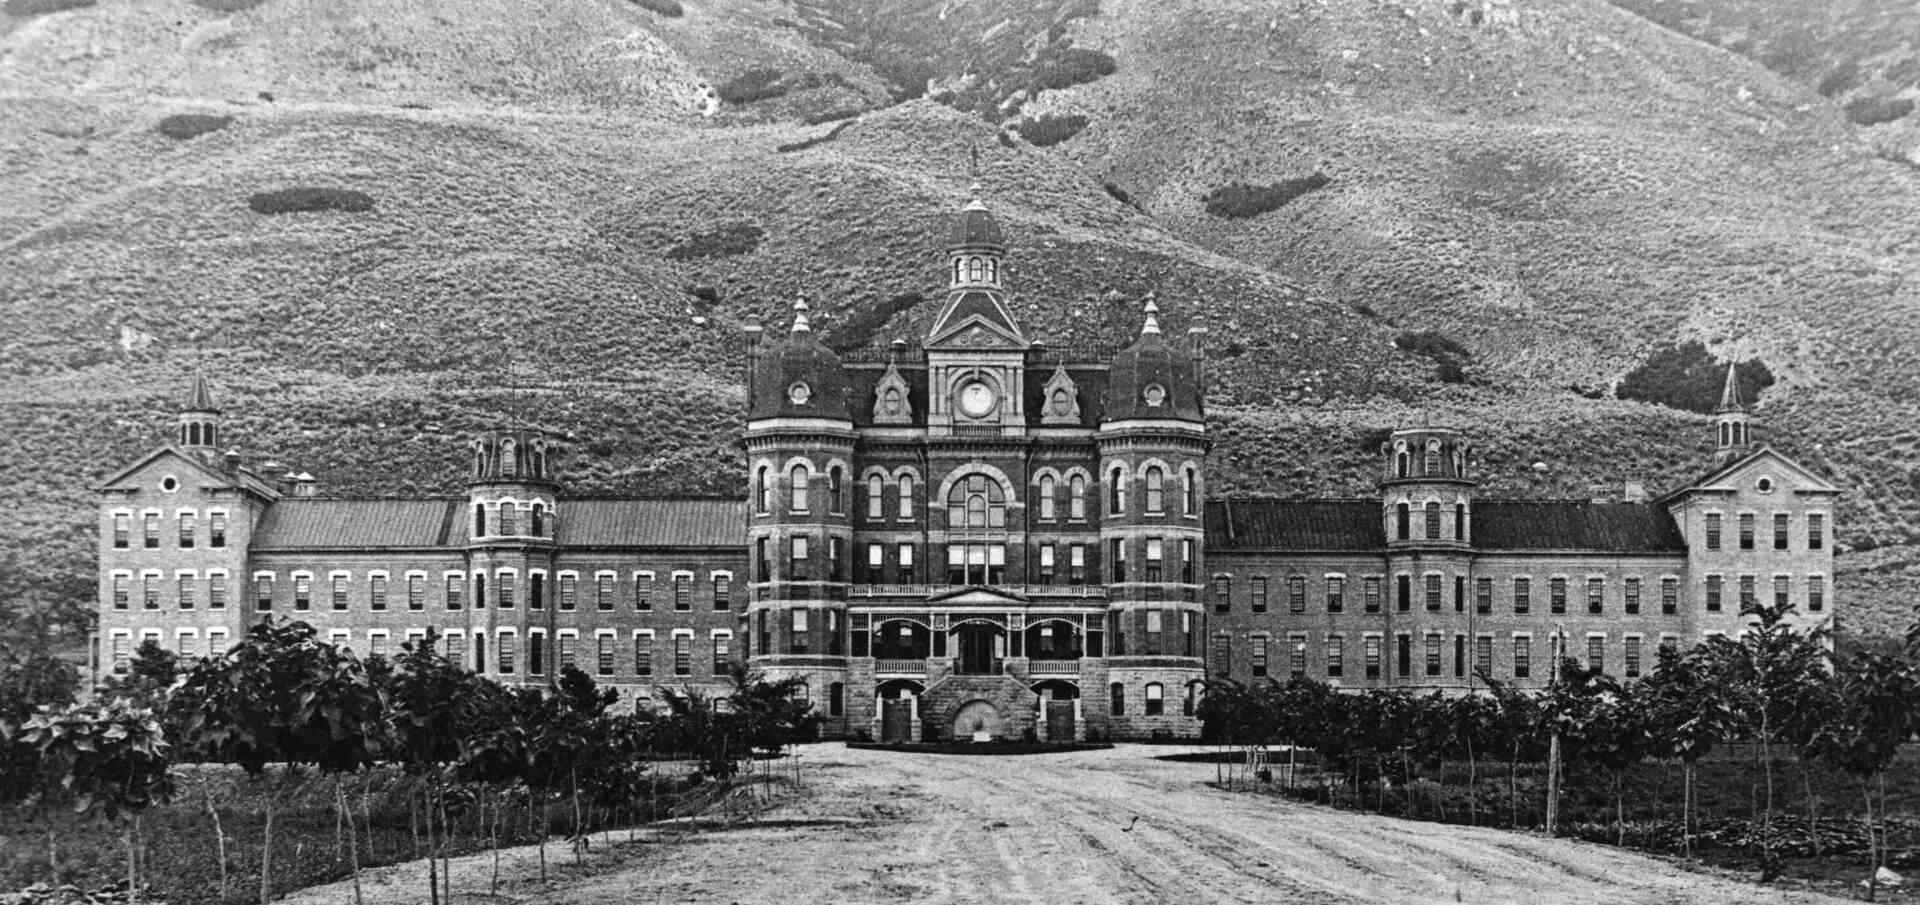 Utah State Hospital (1896)